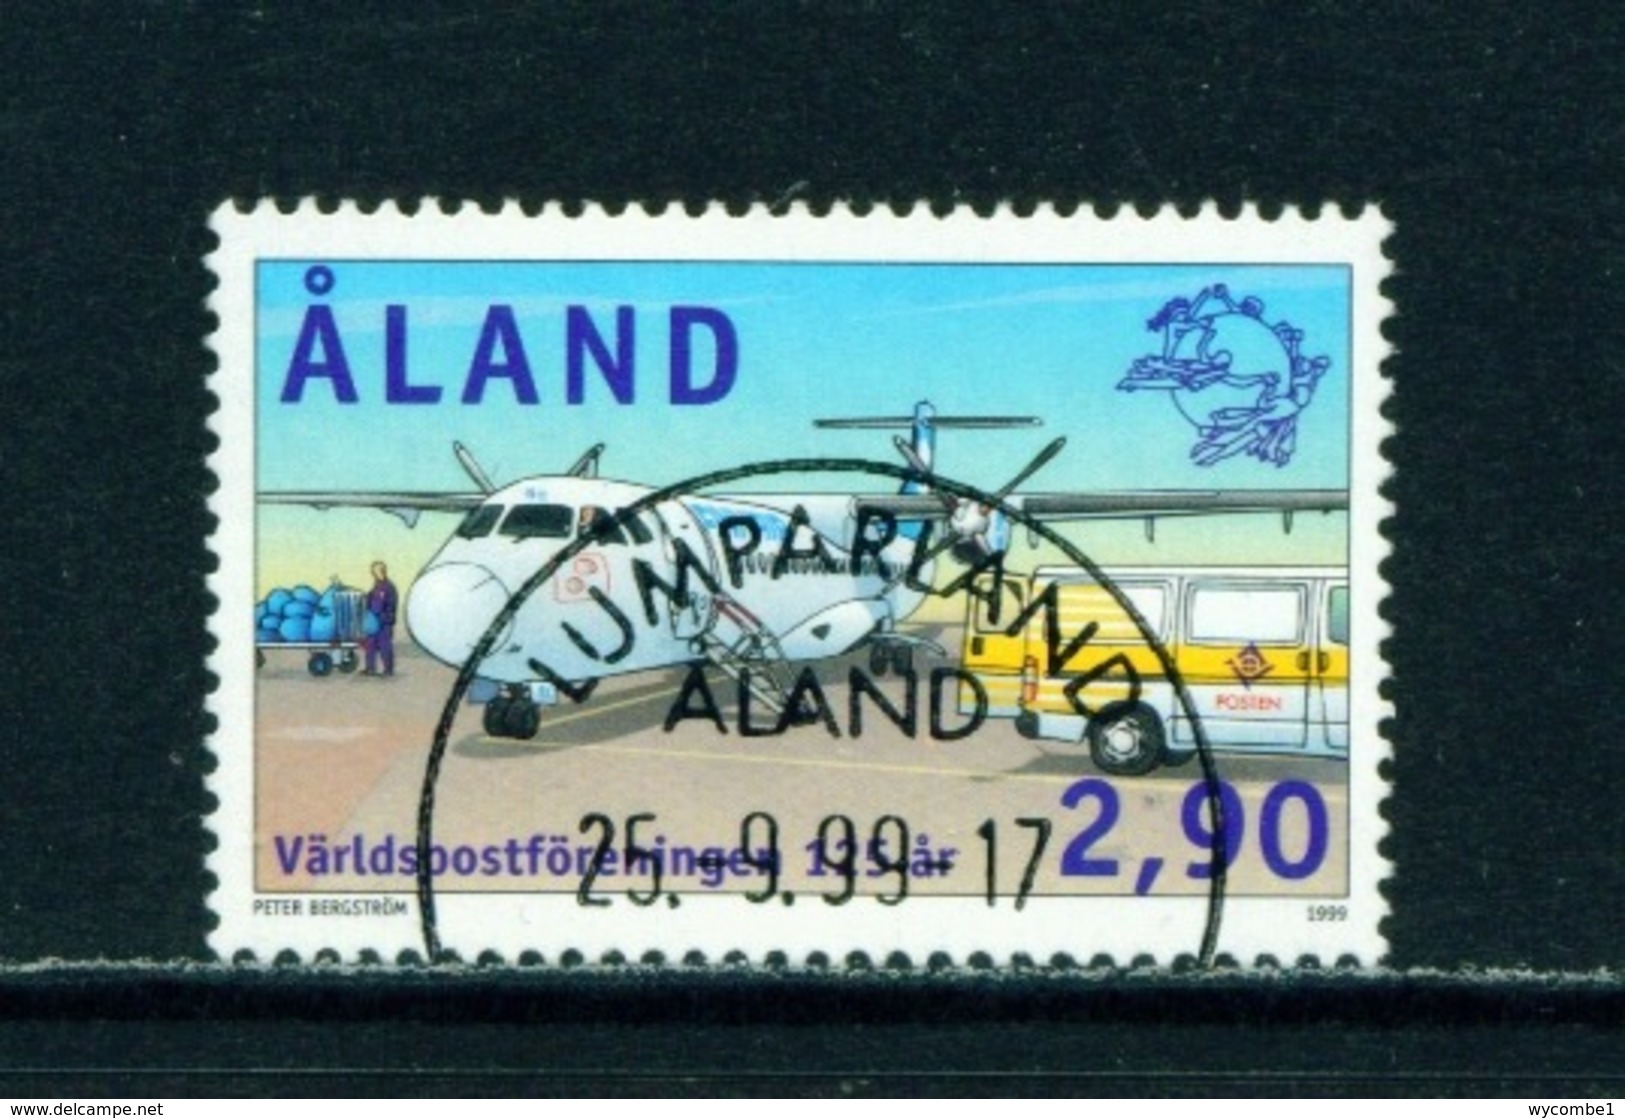 ALAND  -  1999 UPU 2m90 Used As Scan - Ålandinseln